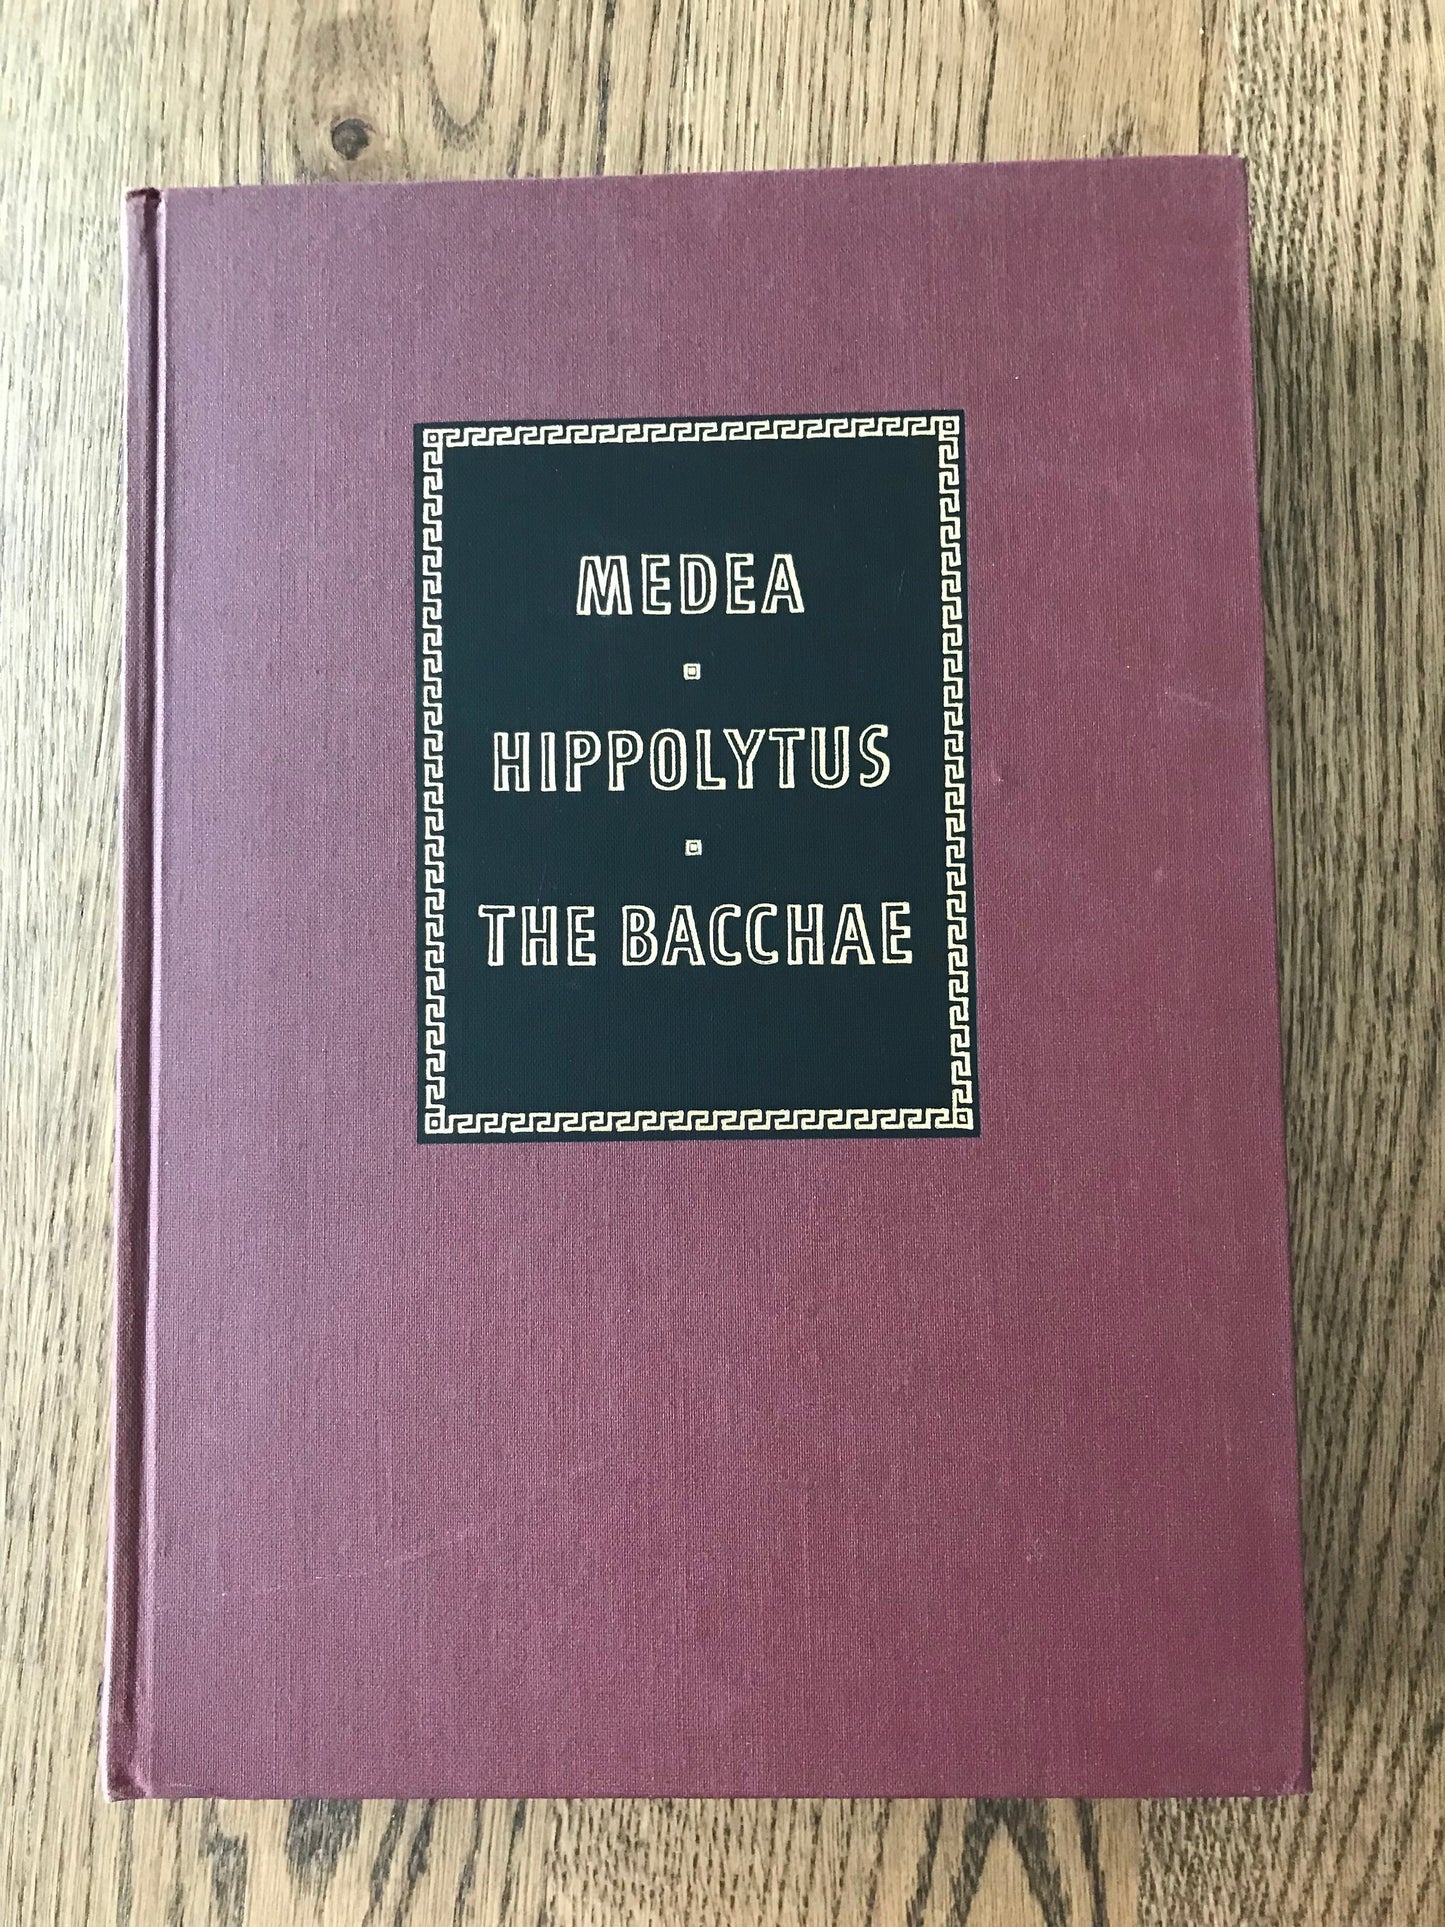 MEDEA HIPPOLYTUS THE BACCHAE -BY EURIPIDES BooksCardsNBikes